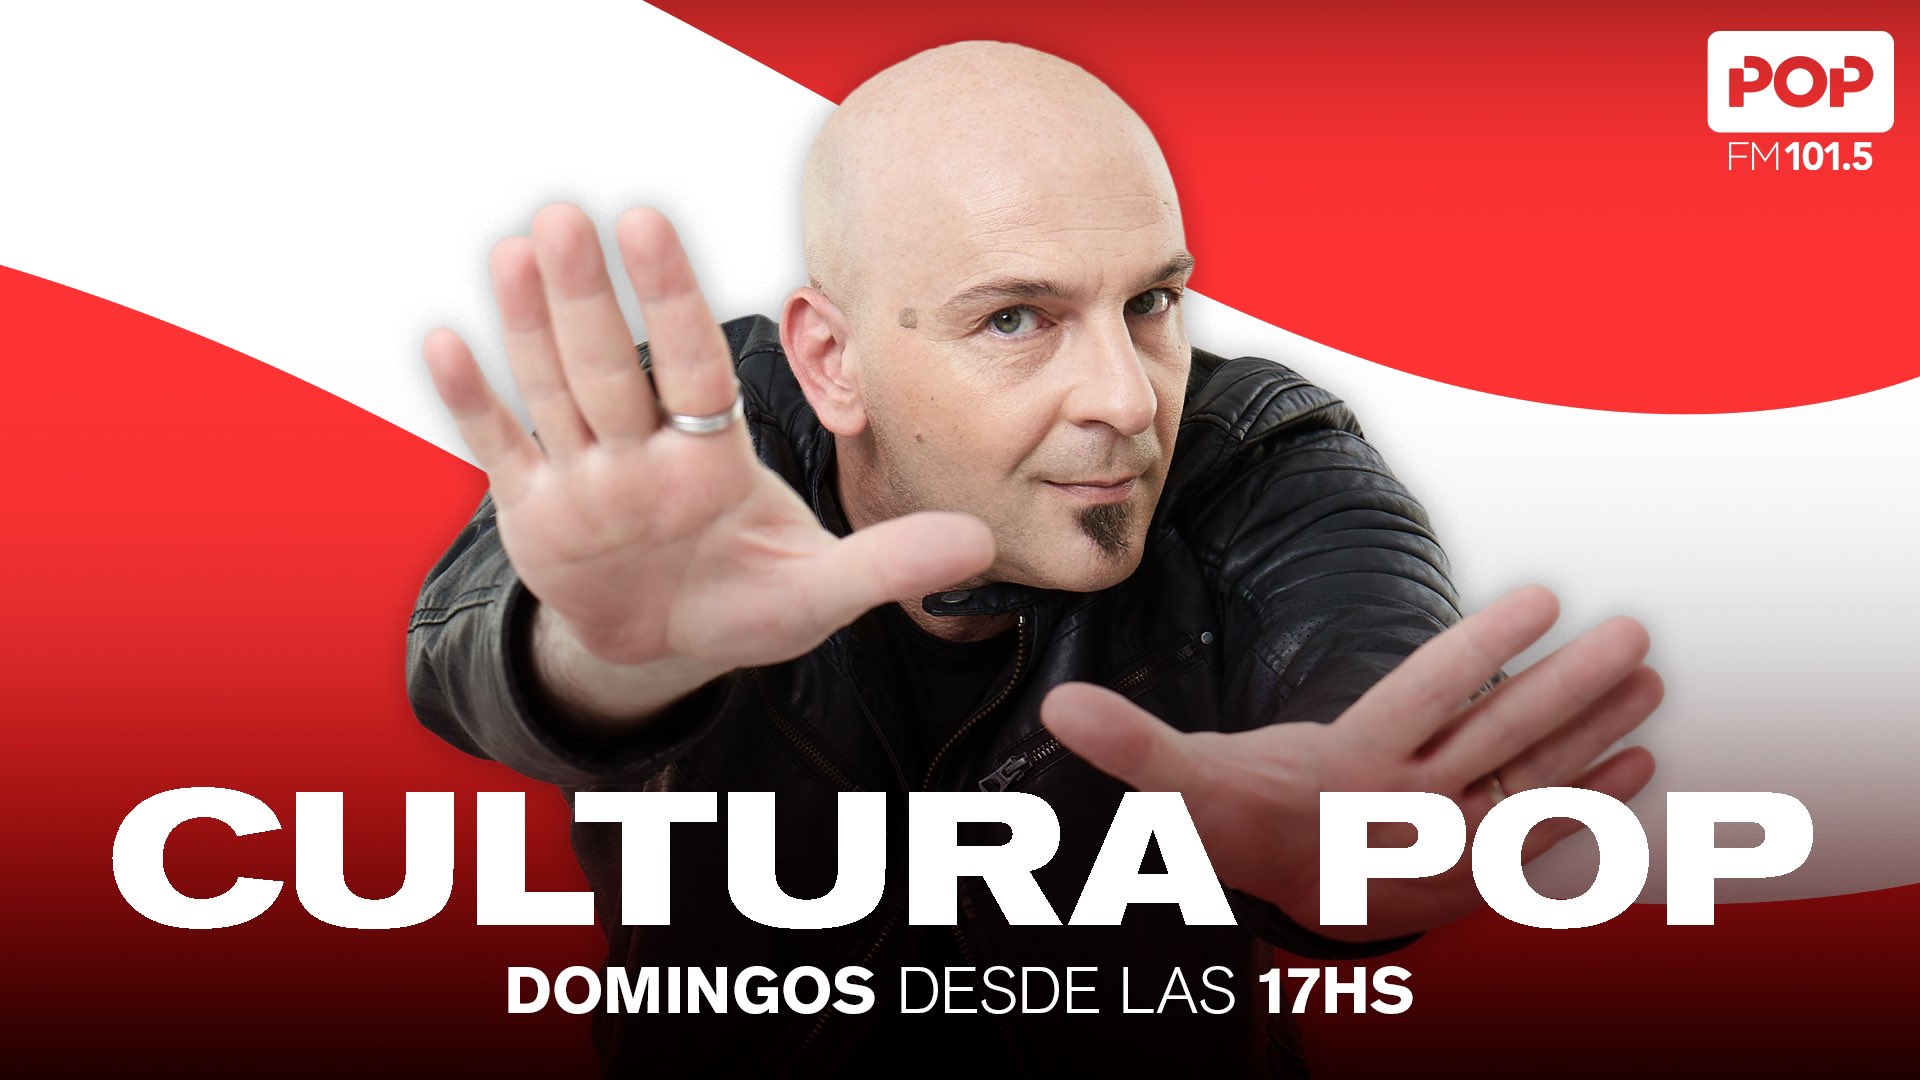 Pop 101.5 FM on Twitter: "AIRE para #CulturaPop hasta las 19 hs! @alexispuig @SebasTabany @LucasPetro92 Escuchanos en vivo👇 📻101.5 💻Youtube Pop Radio 101.5 🌐https://t.co/h73uYsWl4k 📲App Radio 101.5 FM https://t.co/ILPAfBaxsl"